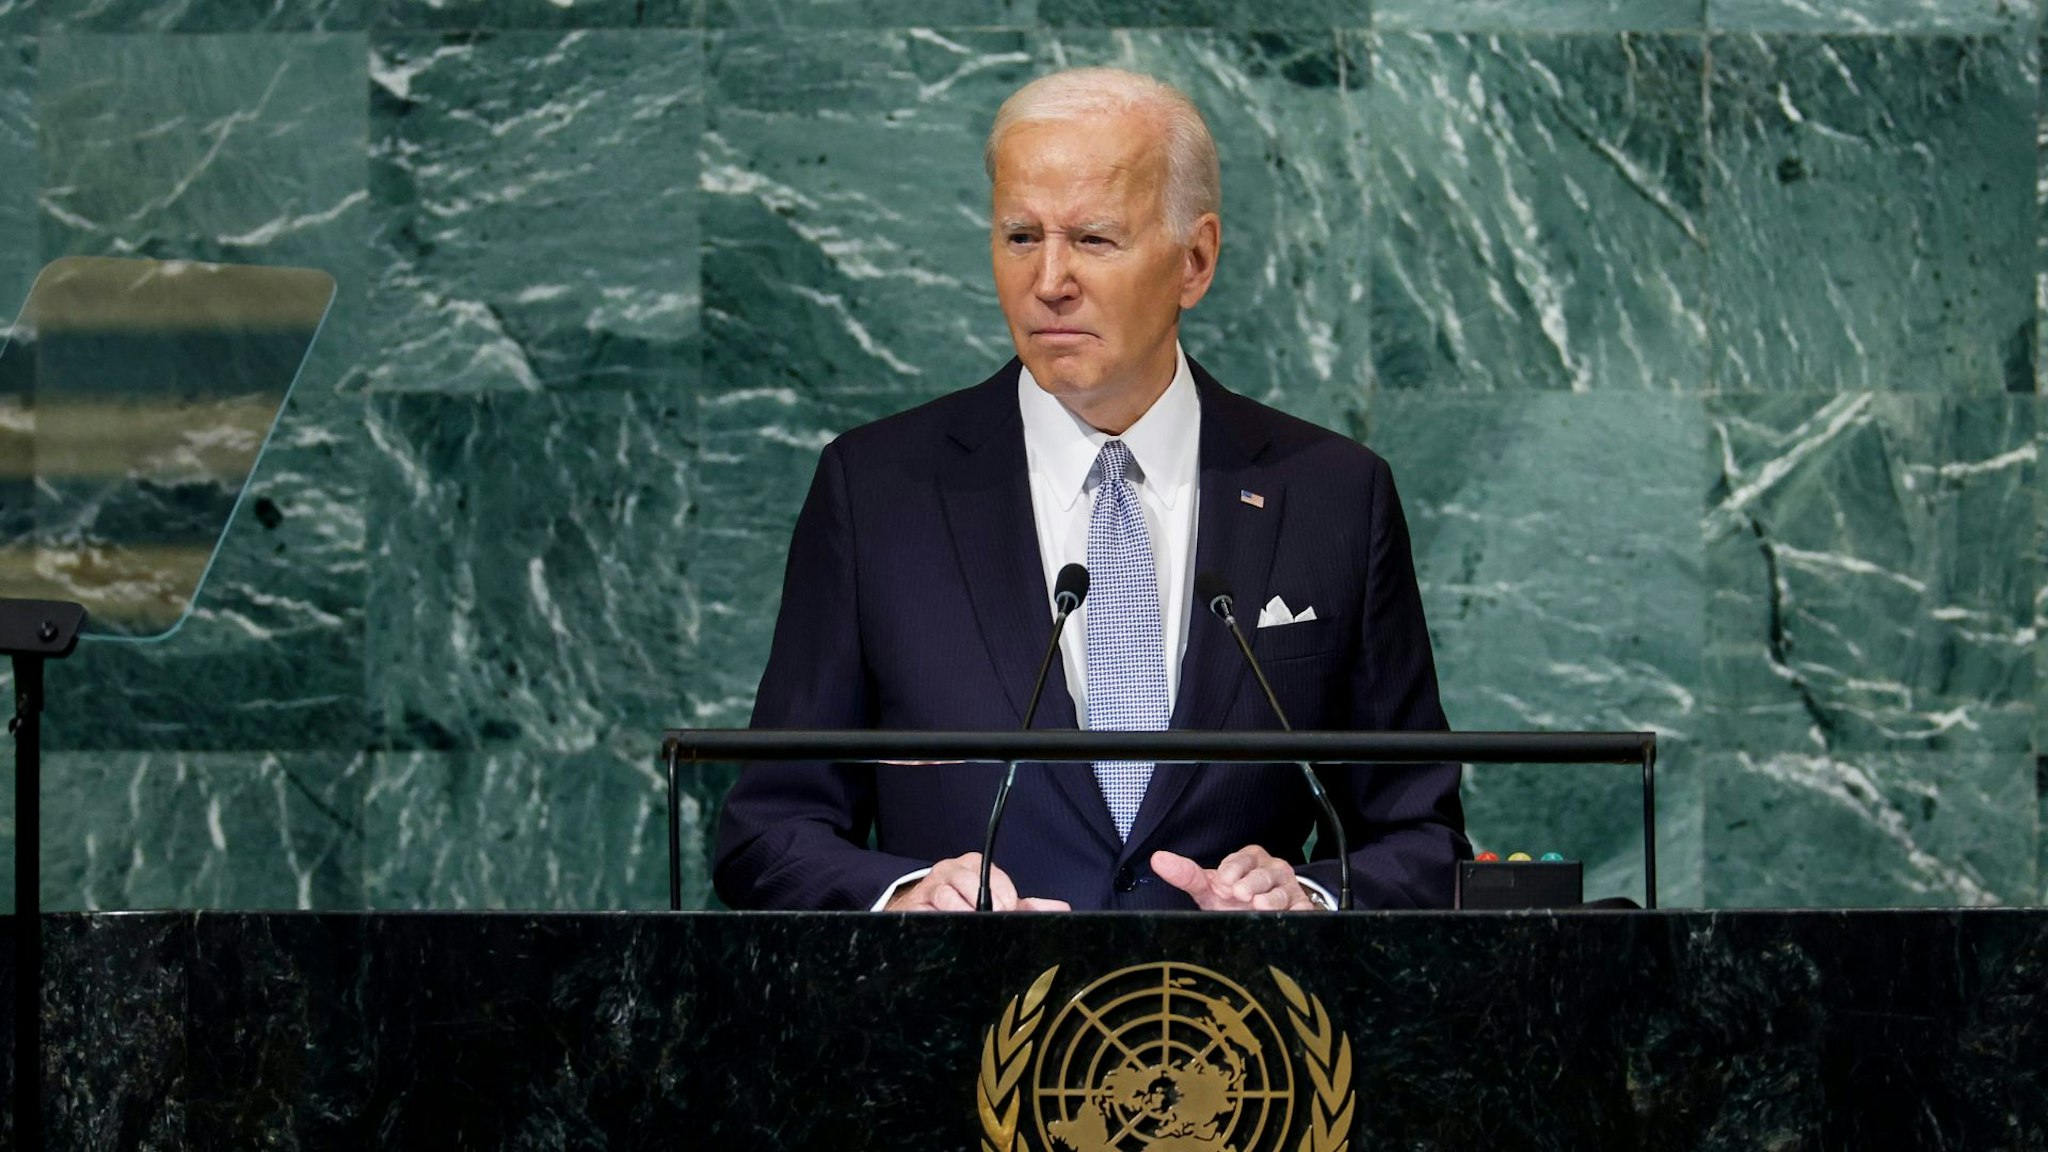 NEW YORK, NEW YORK - SEPTEMBER 21: U.S. President Joe Biden speaks during the 77th session of the United Nations General Assembly (UNGA) at U.N. headquarters on September 21, 2022 in New York City.